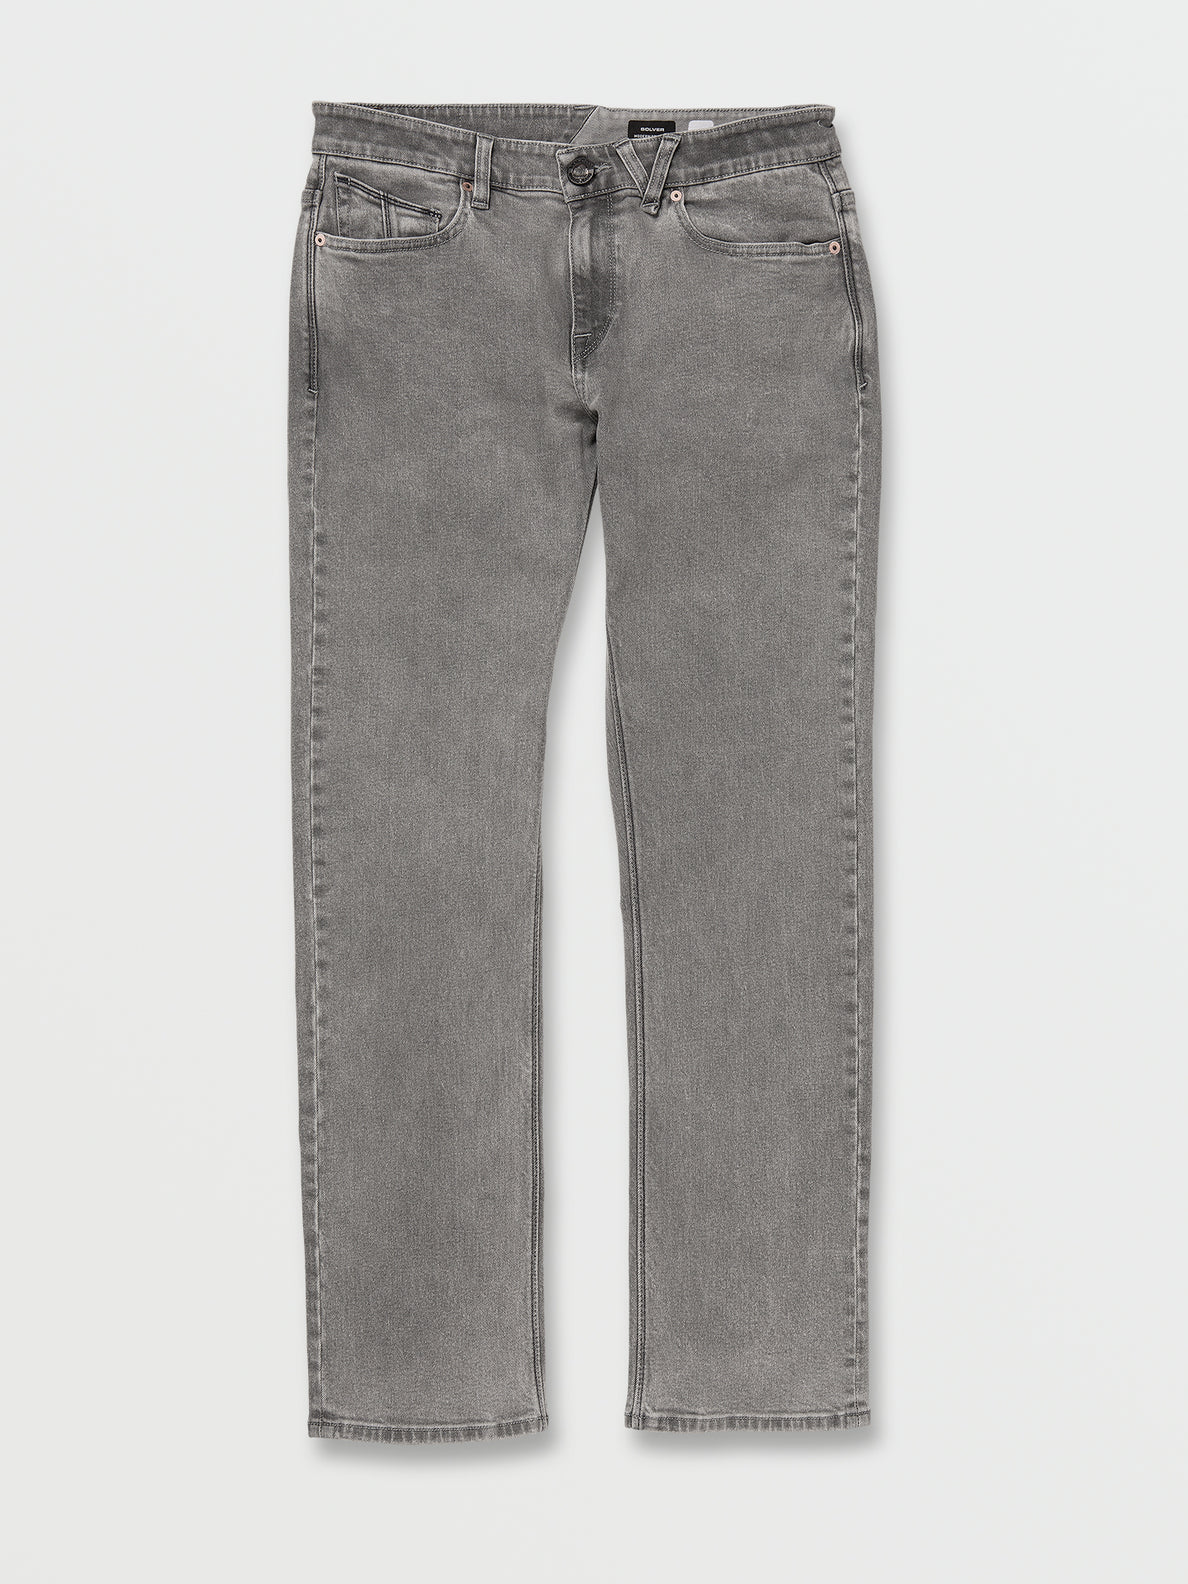 Volcom Solver Modern Fit Jeans - Old Grey